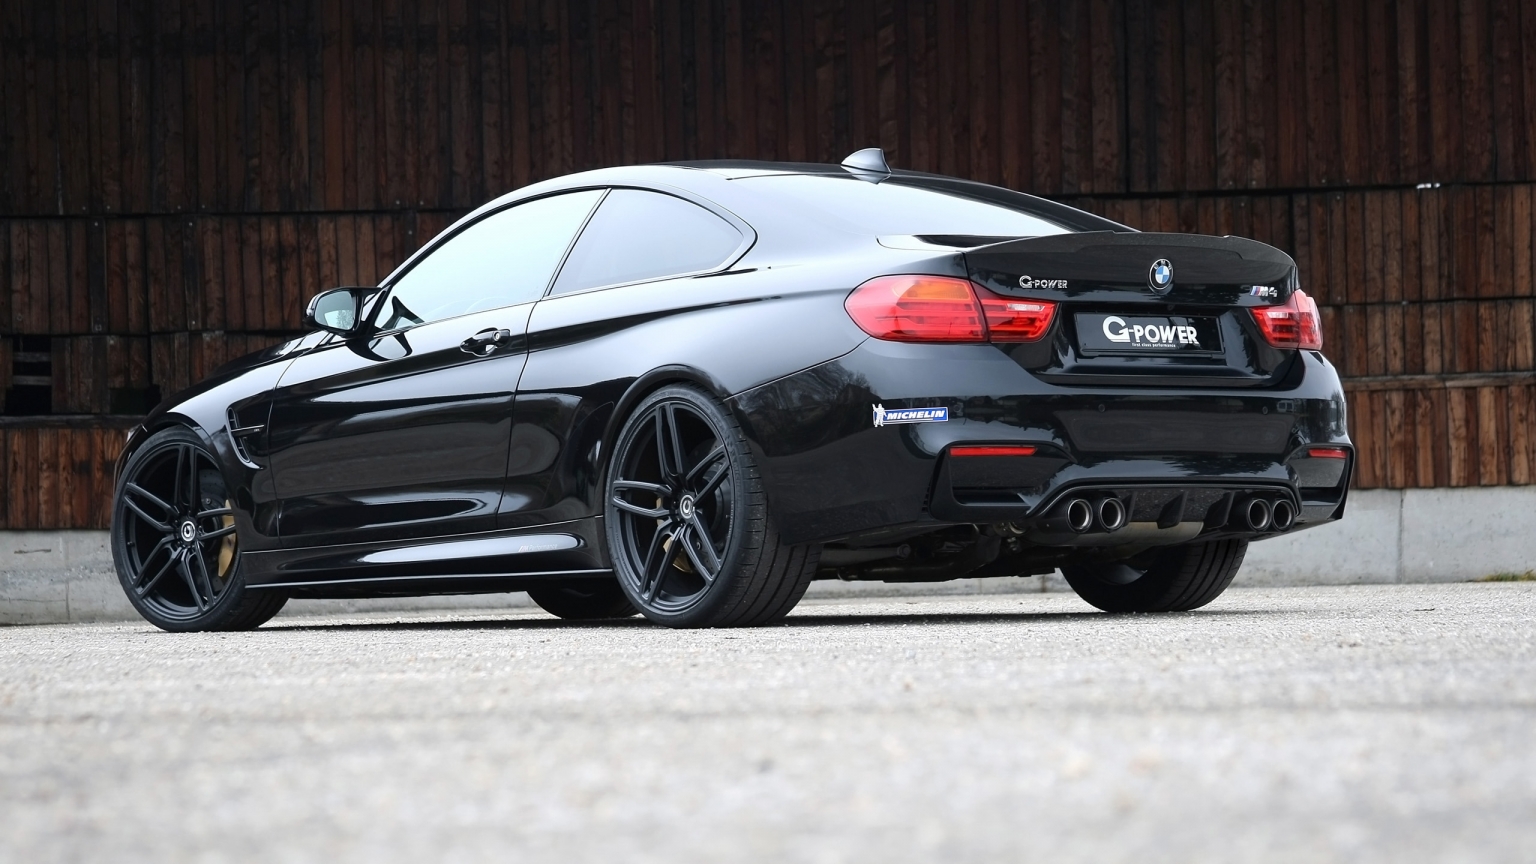 Black BMW M4 G-Power 2014 Rear for 1536 x 864 HDTV resolution